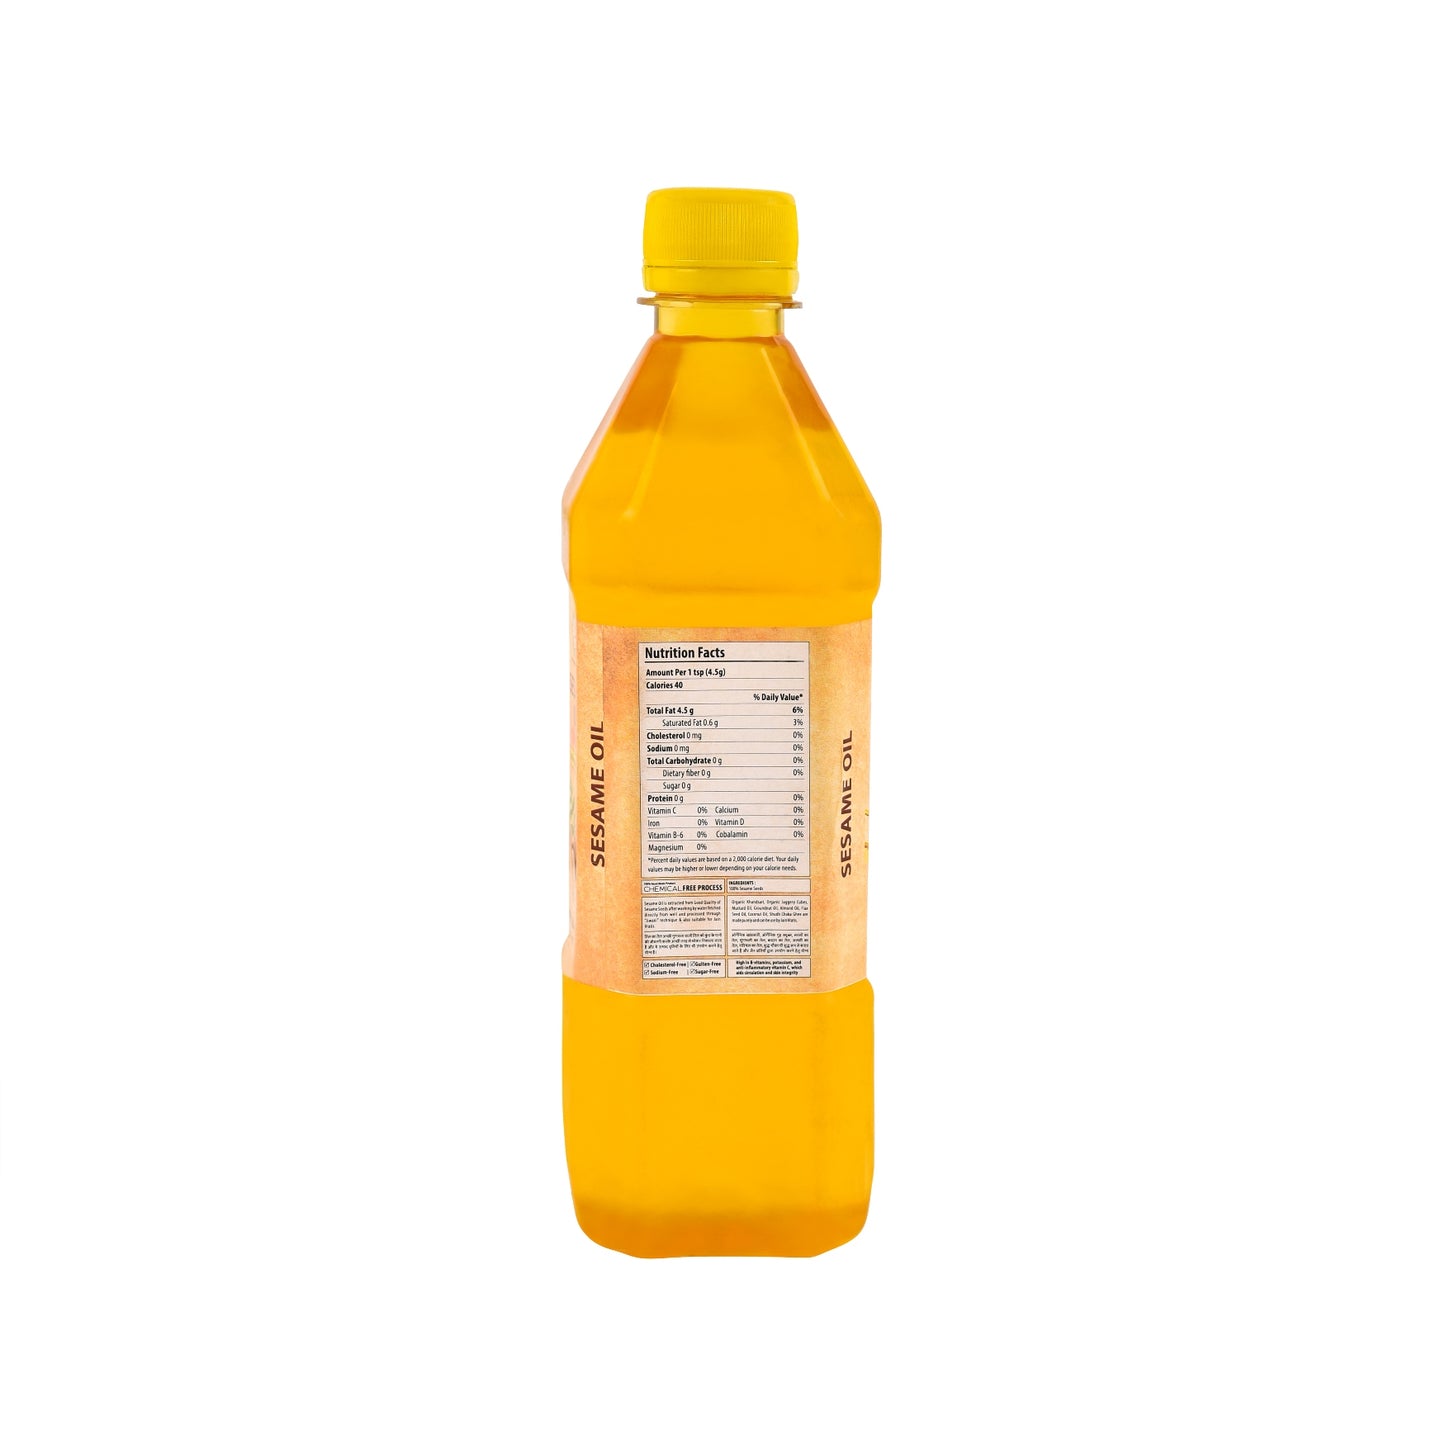 Organic white Sesame seed Oil | Pack of 500 ML